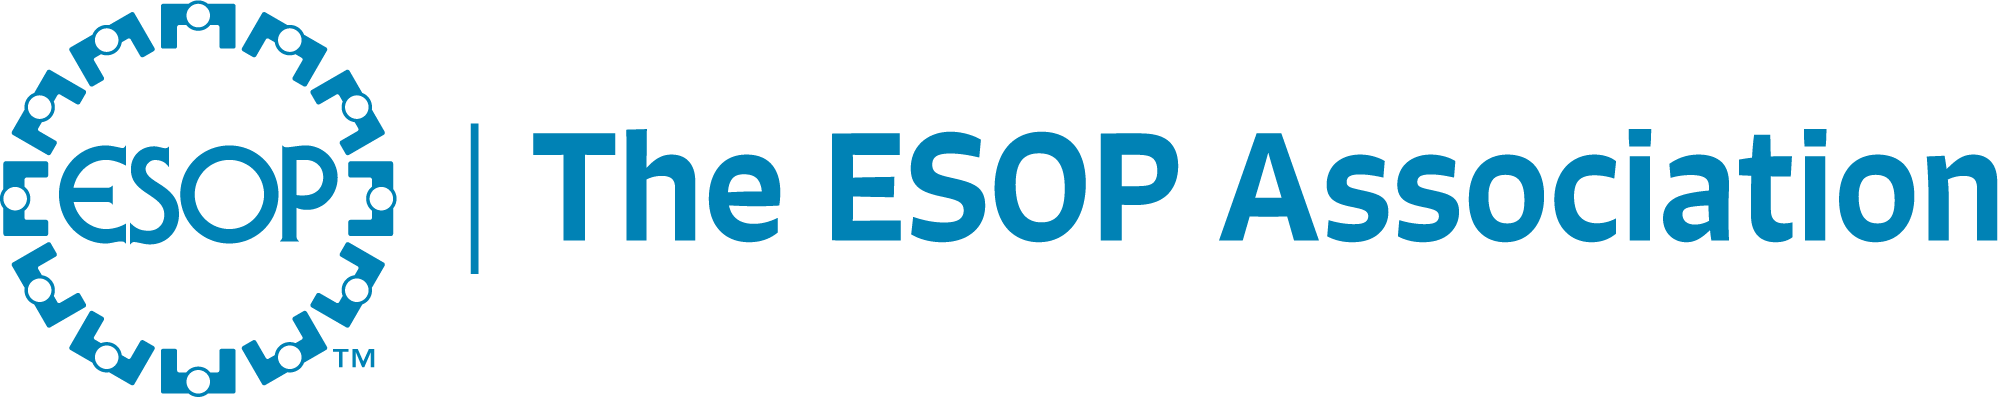 ESOP Association logo no background